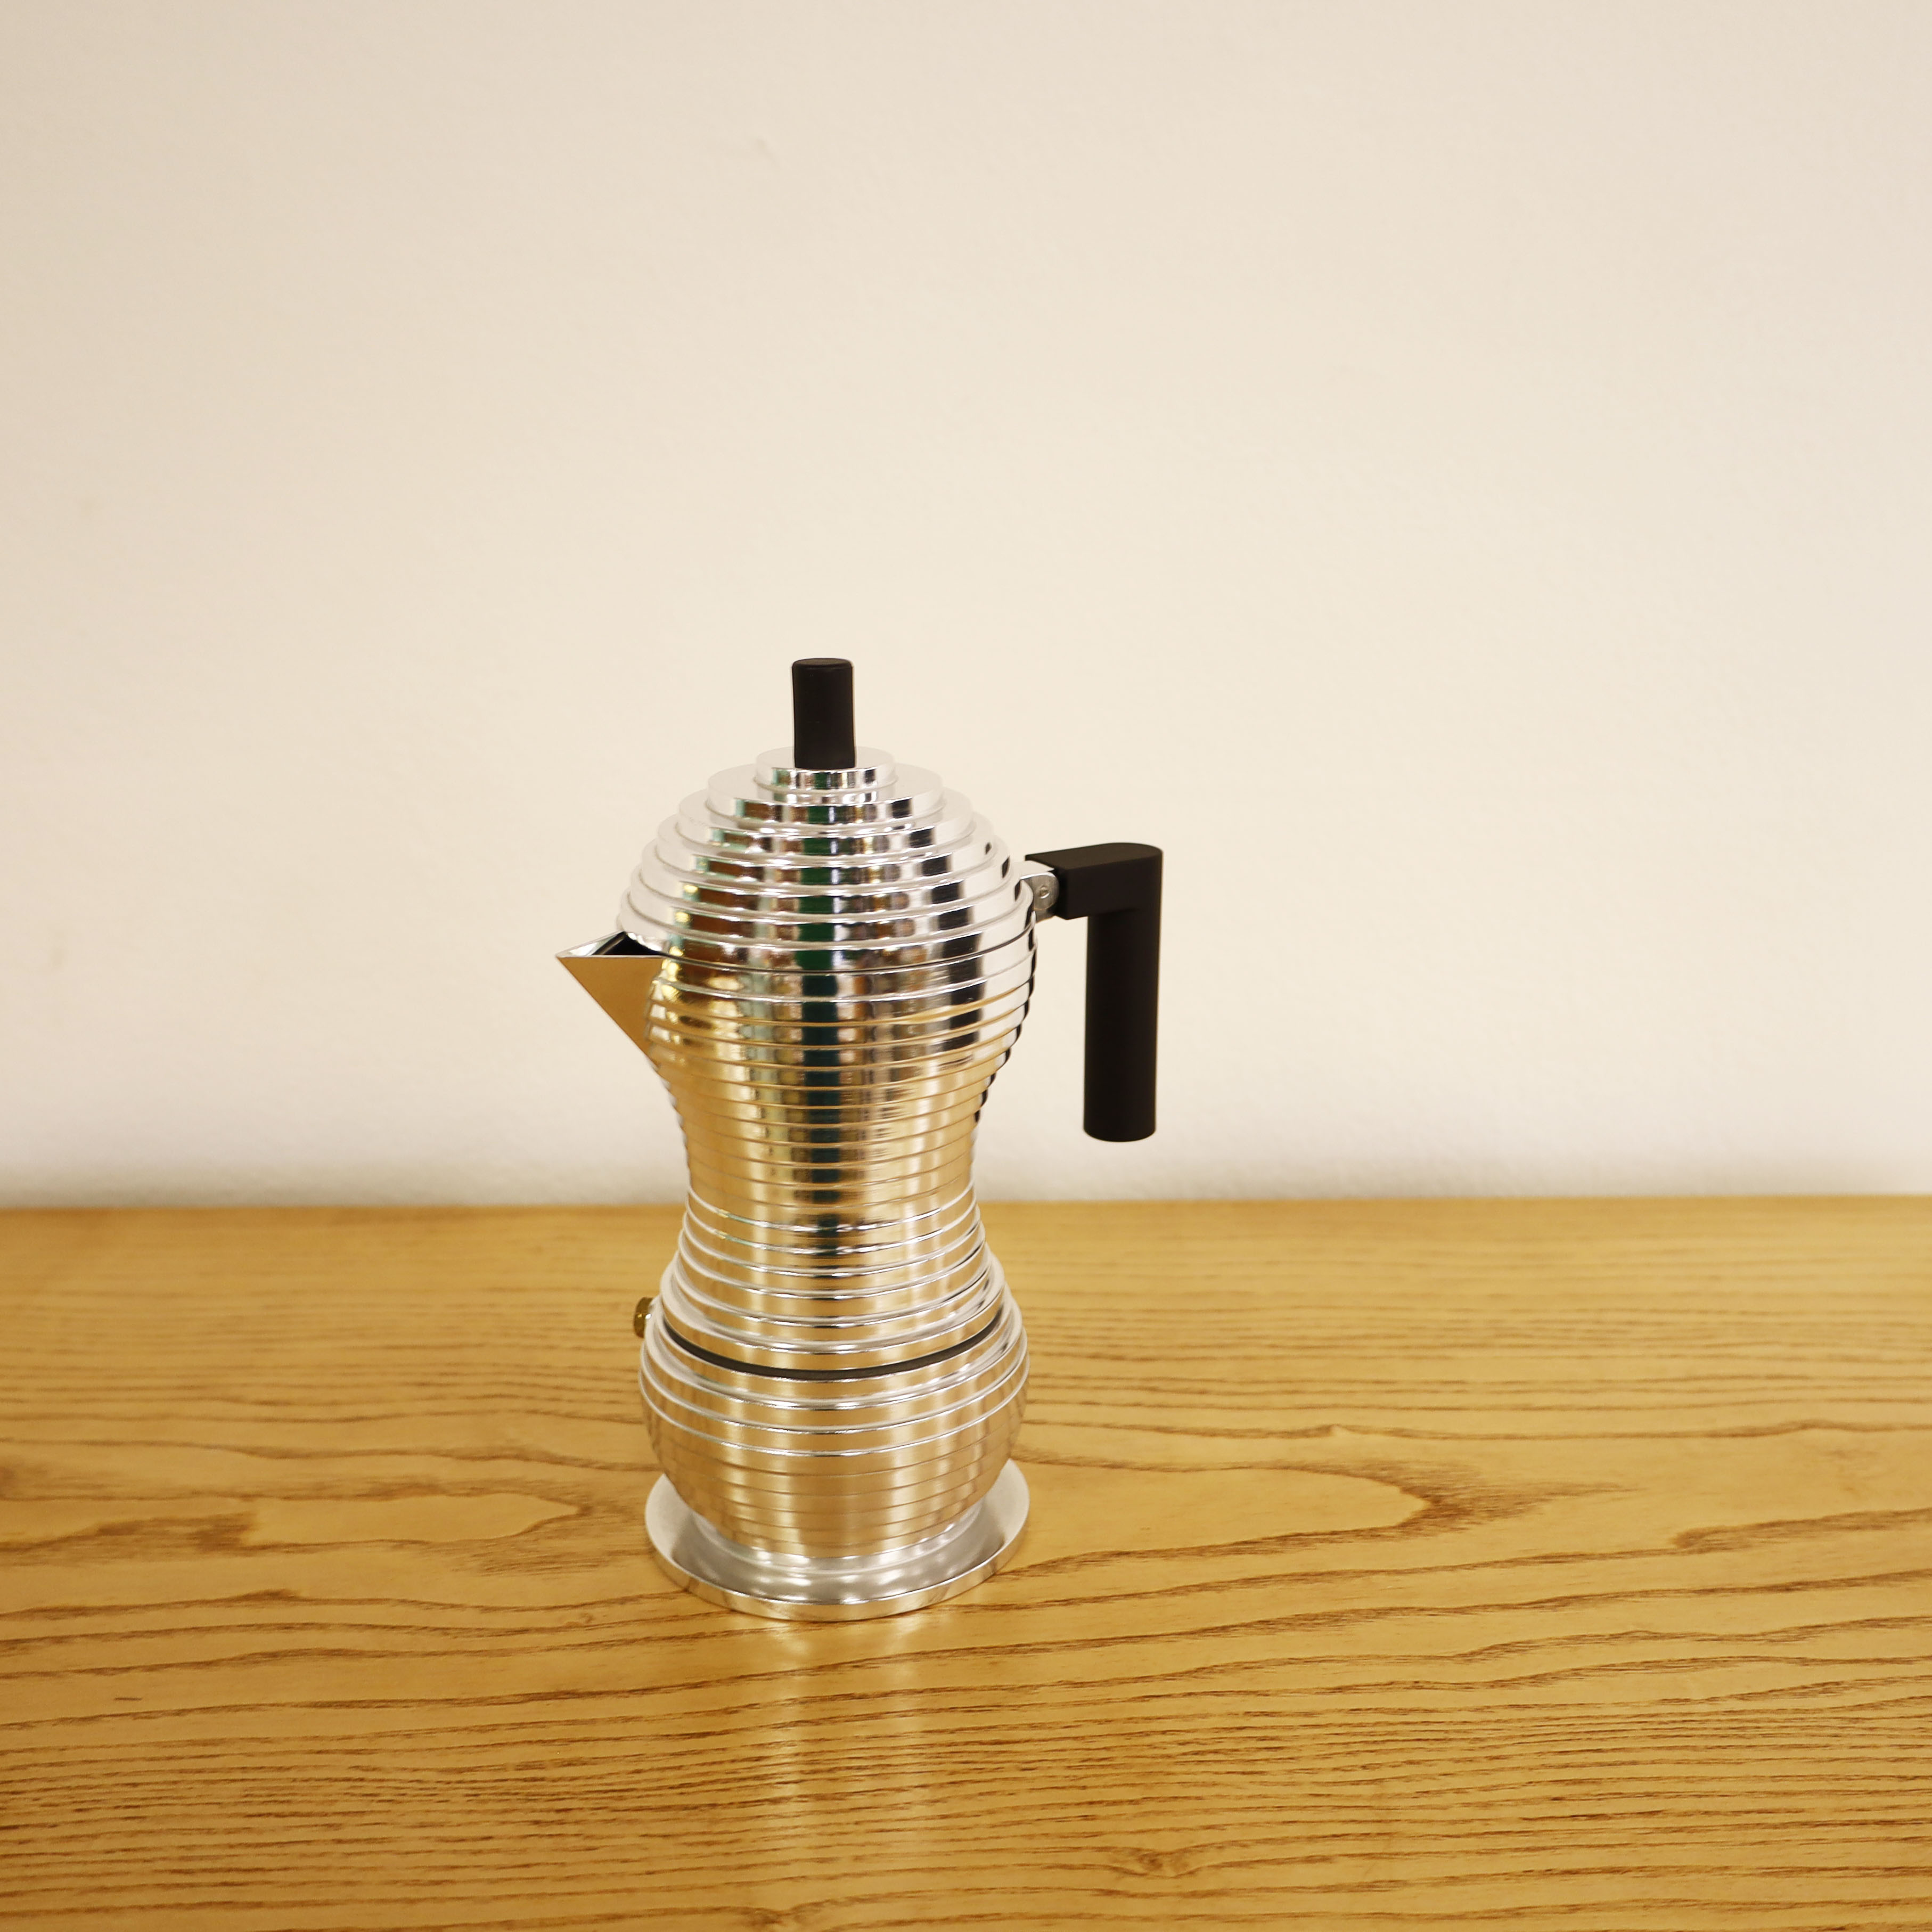 Alessi Pulcina Espresso Coffee Maker Review